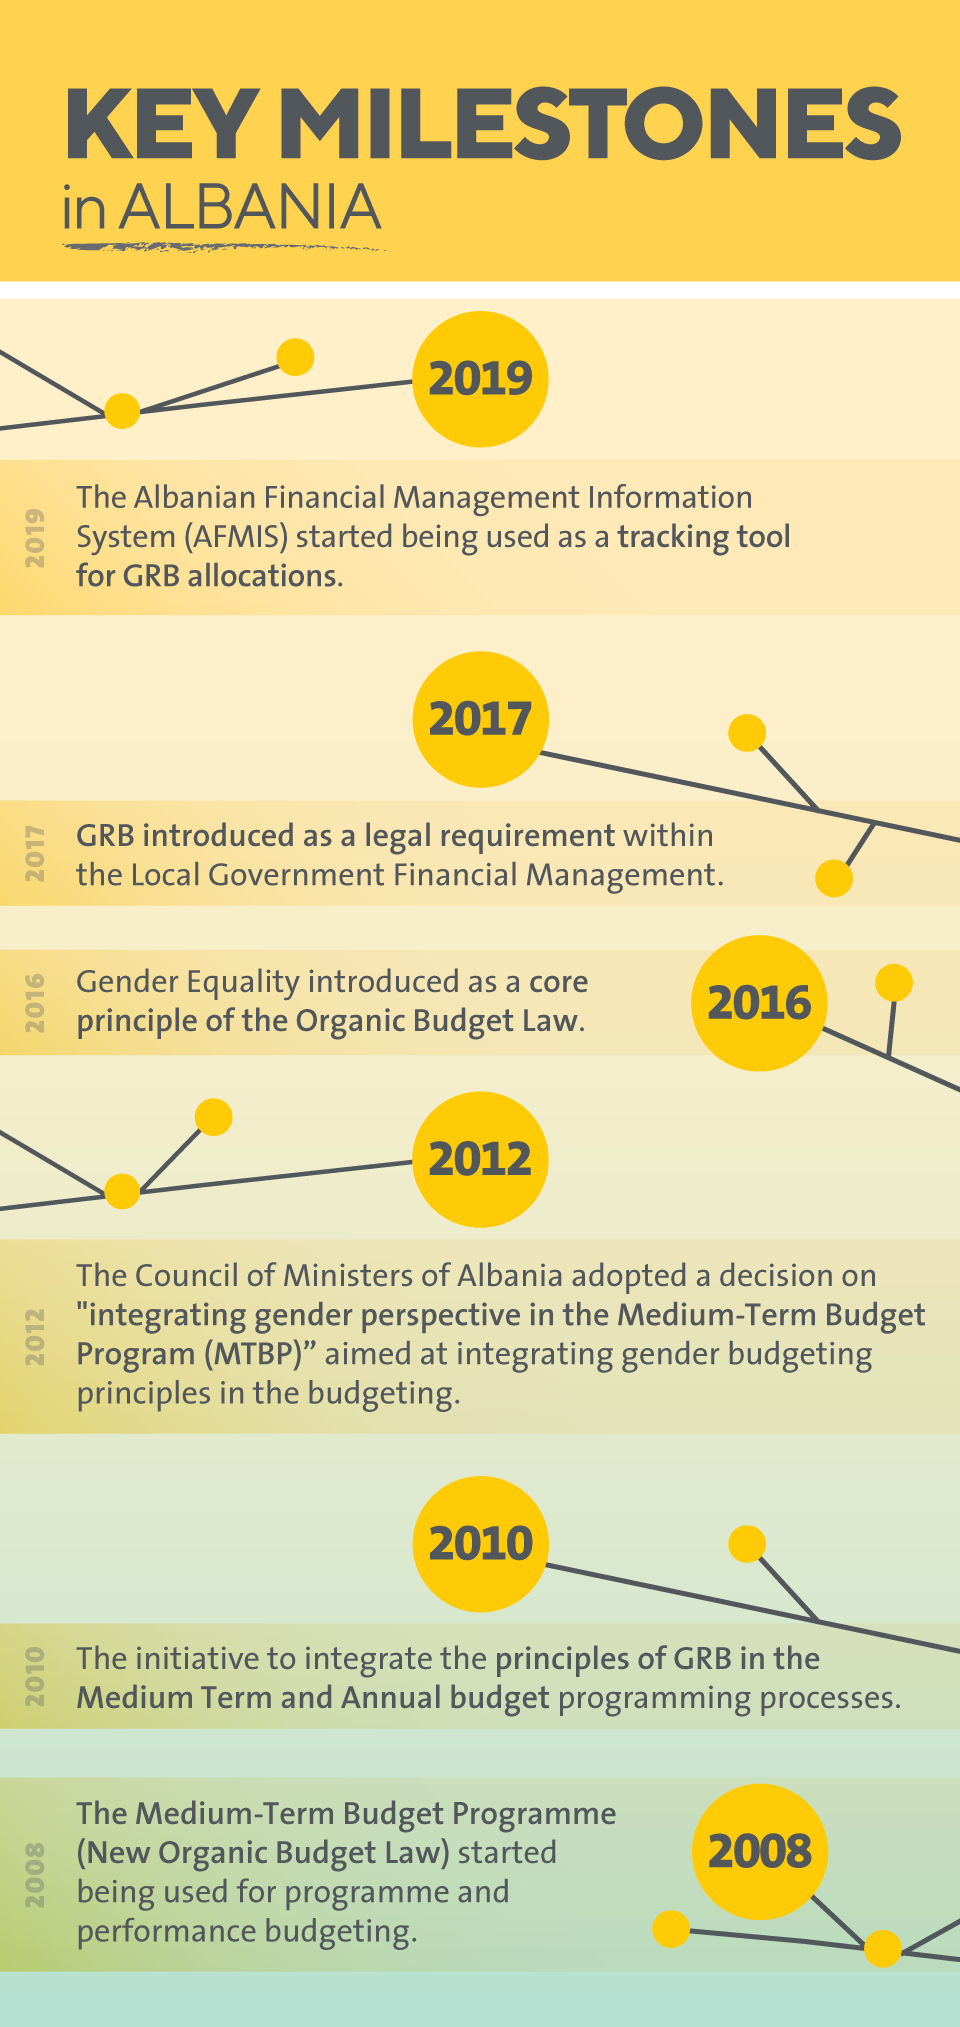 Key milestones in Albania